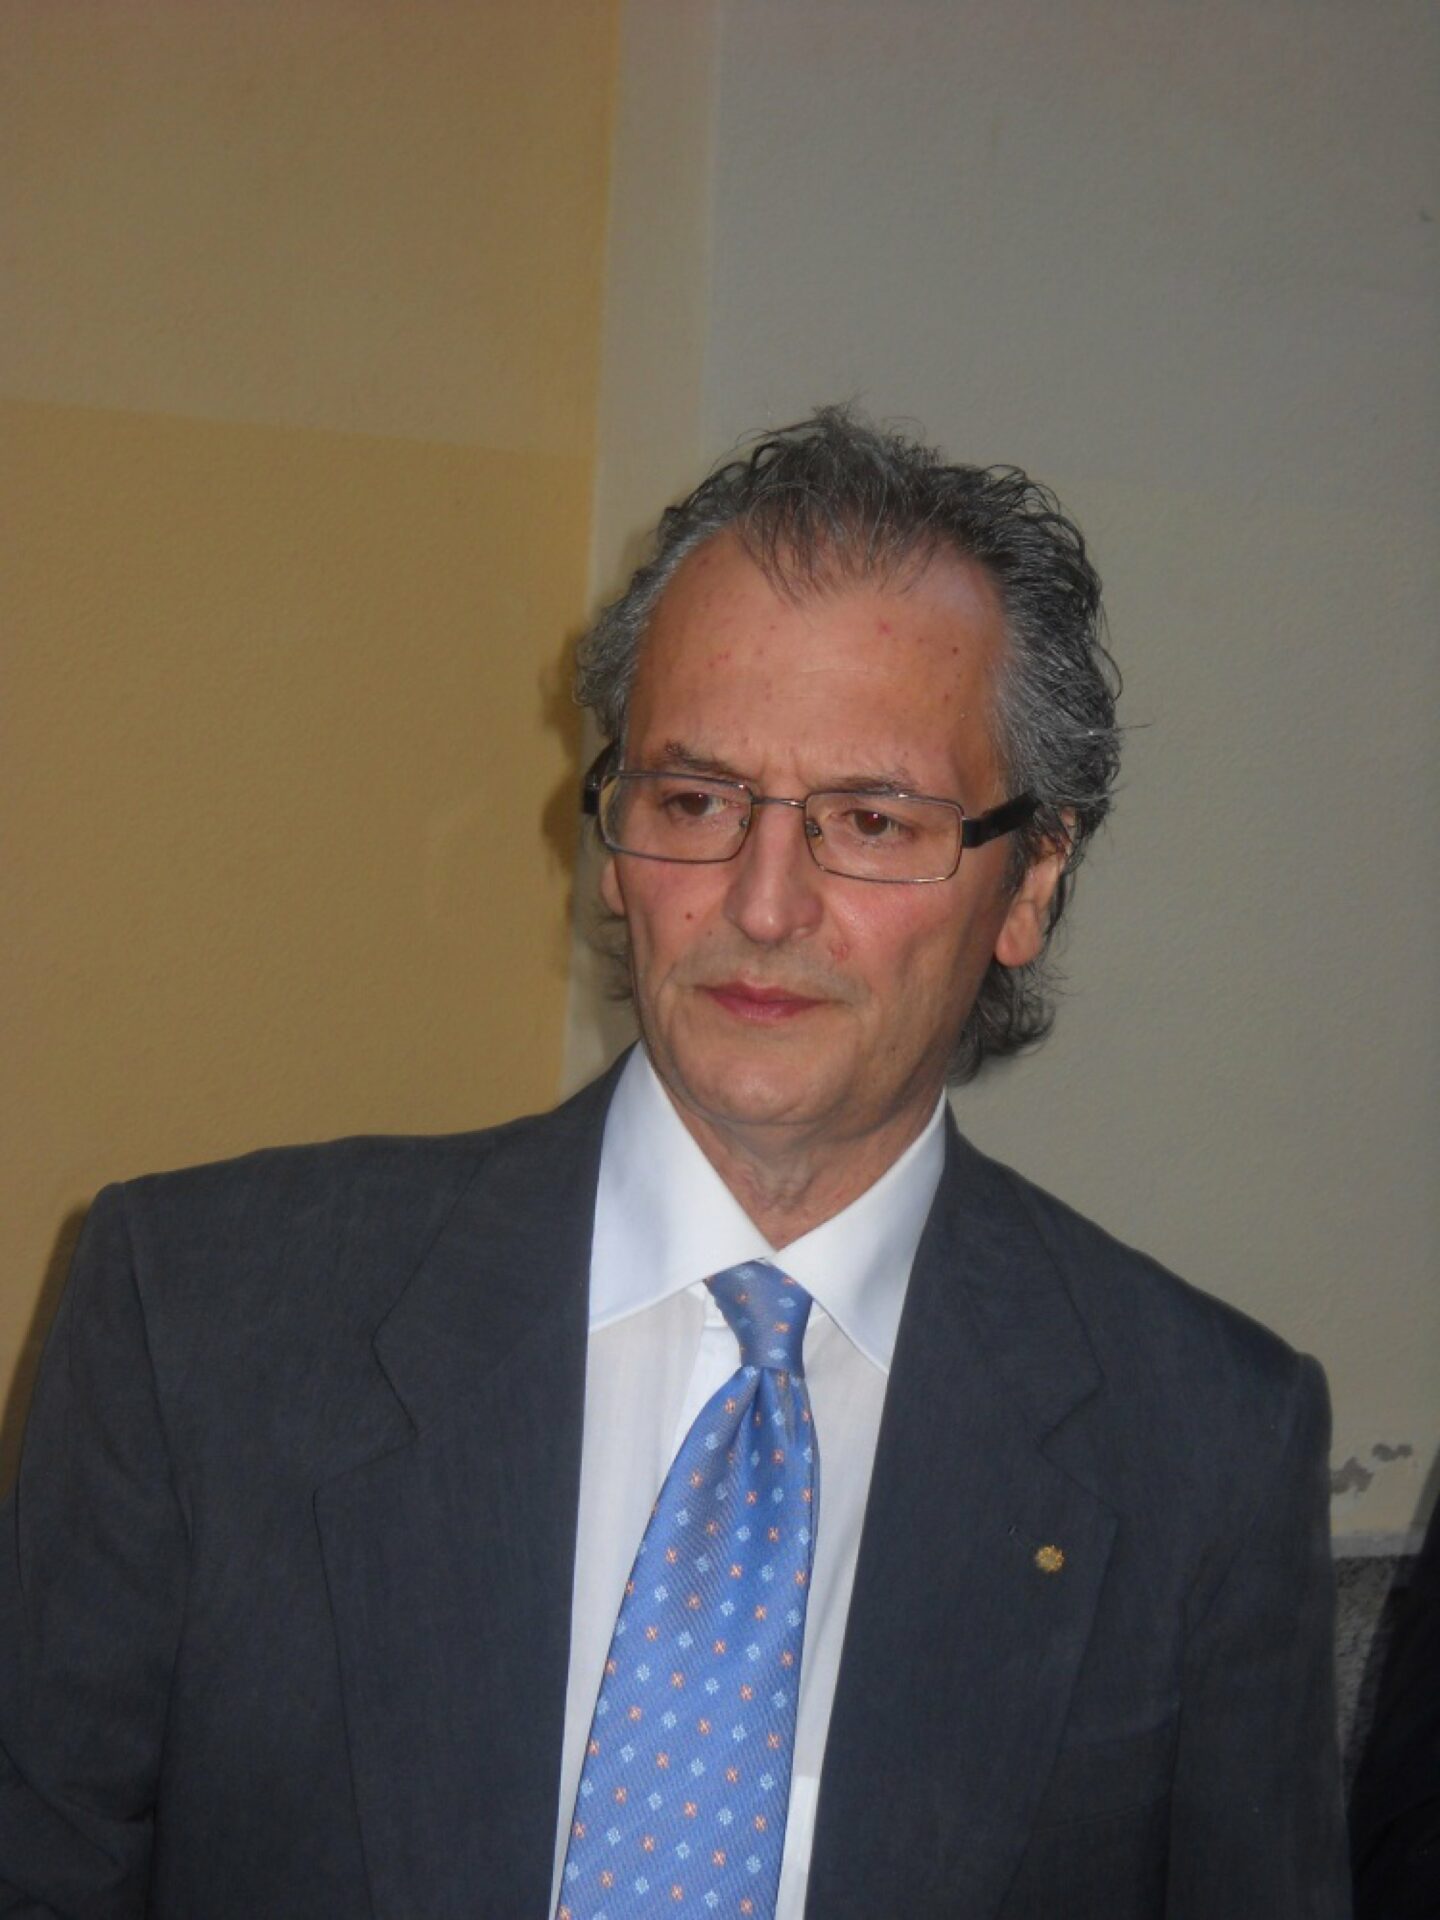 Giuseppe Gagliano Candela